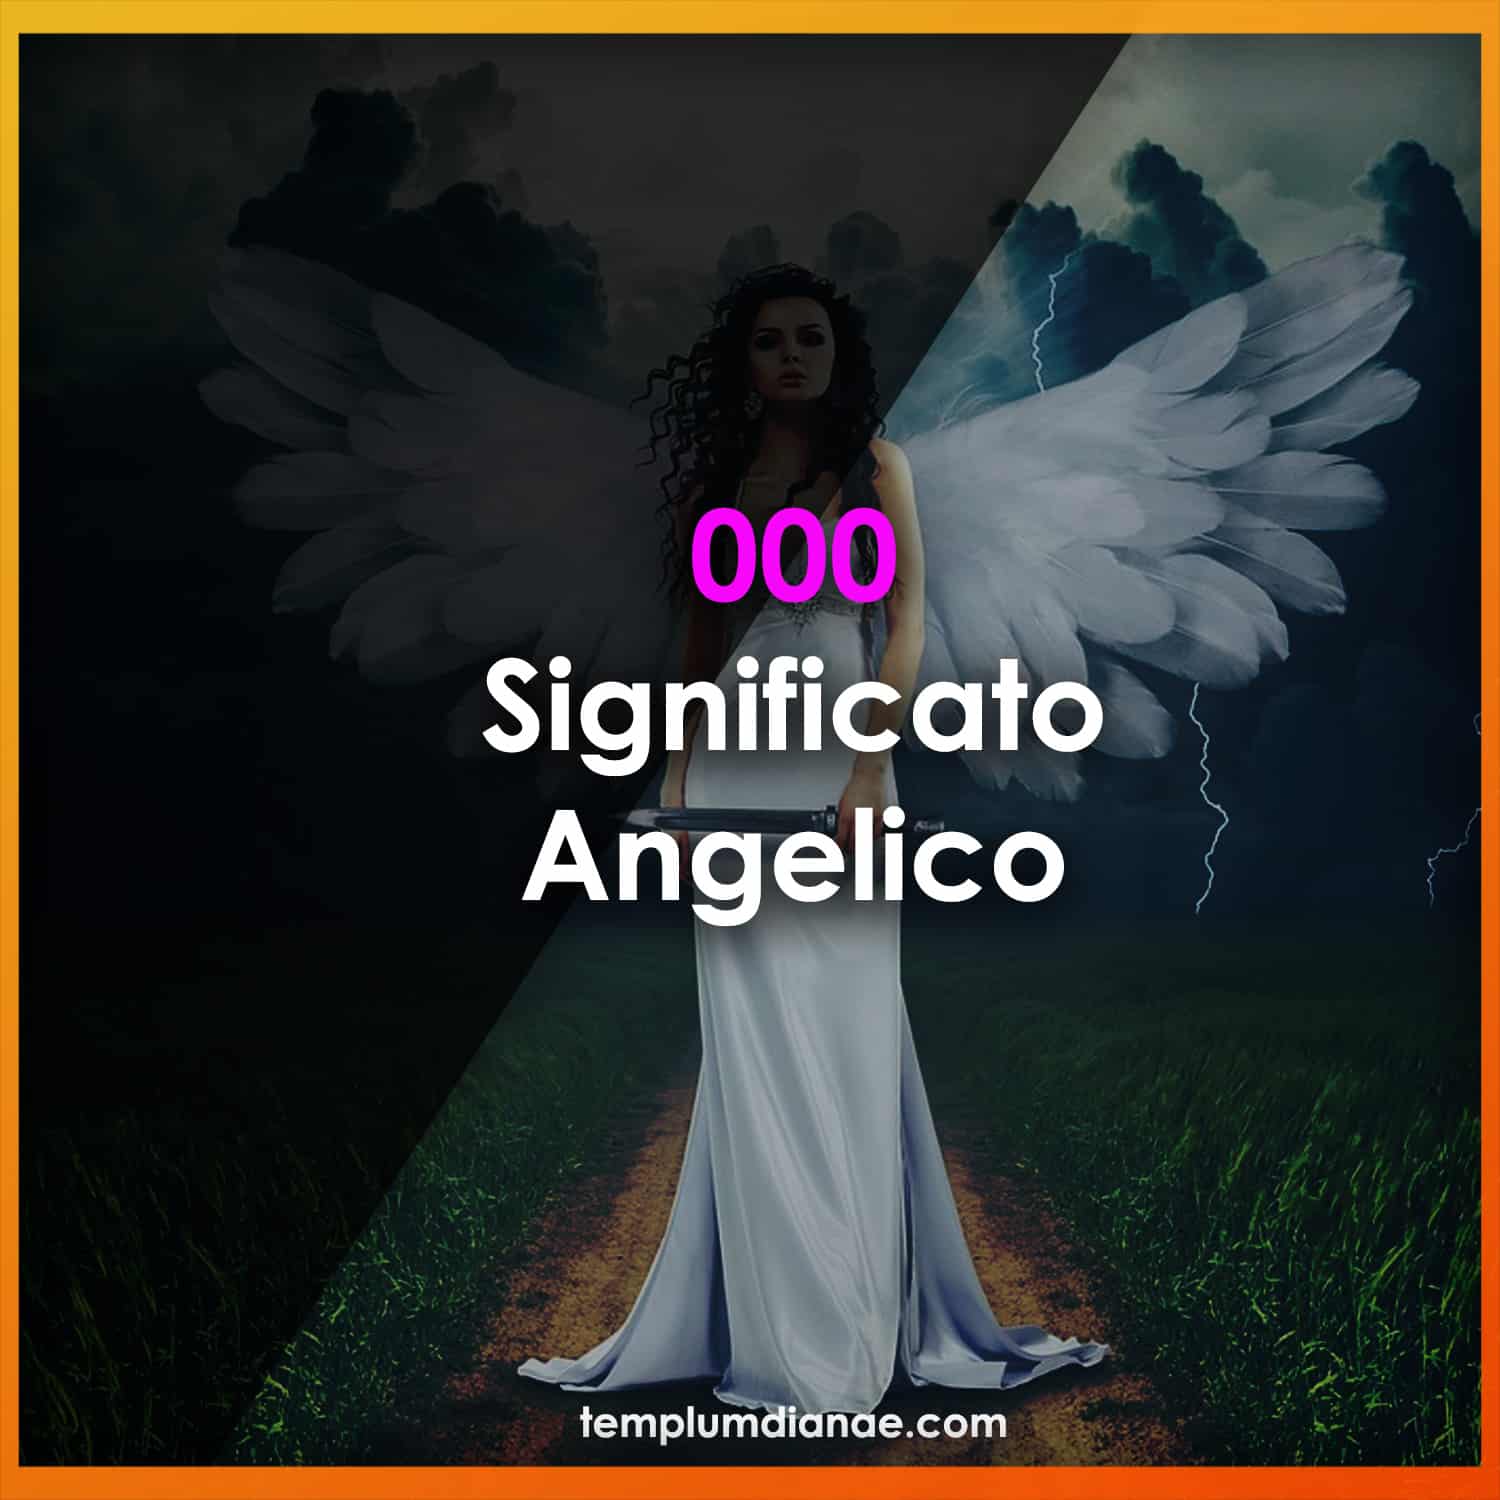 000 significato angelico